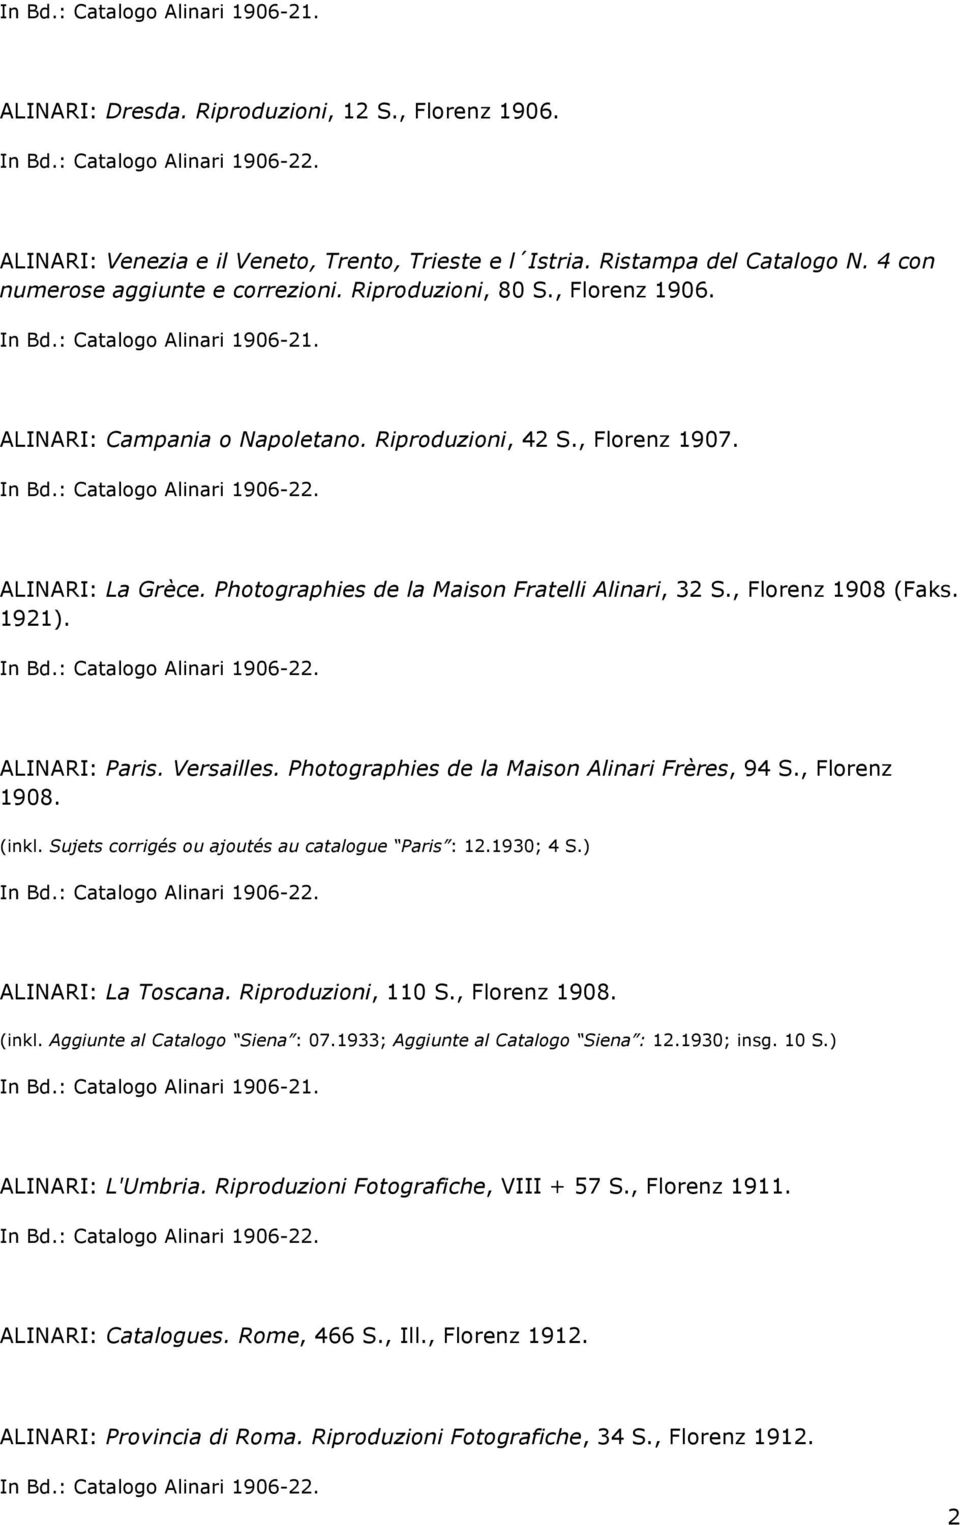 In Bd.: Catalogo Alinari 1906-22. ALINARI: La Grèce. Photographies de la Maison Fratelli Alinari, 32 S., Florenz 1908 (Faks. 1921). In Bd.: Catalogo Alinari 1906-22. ALINARI: Paris. Versailles.